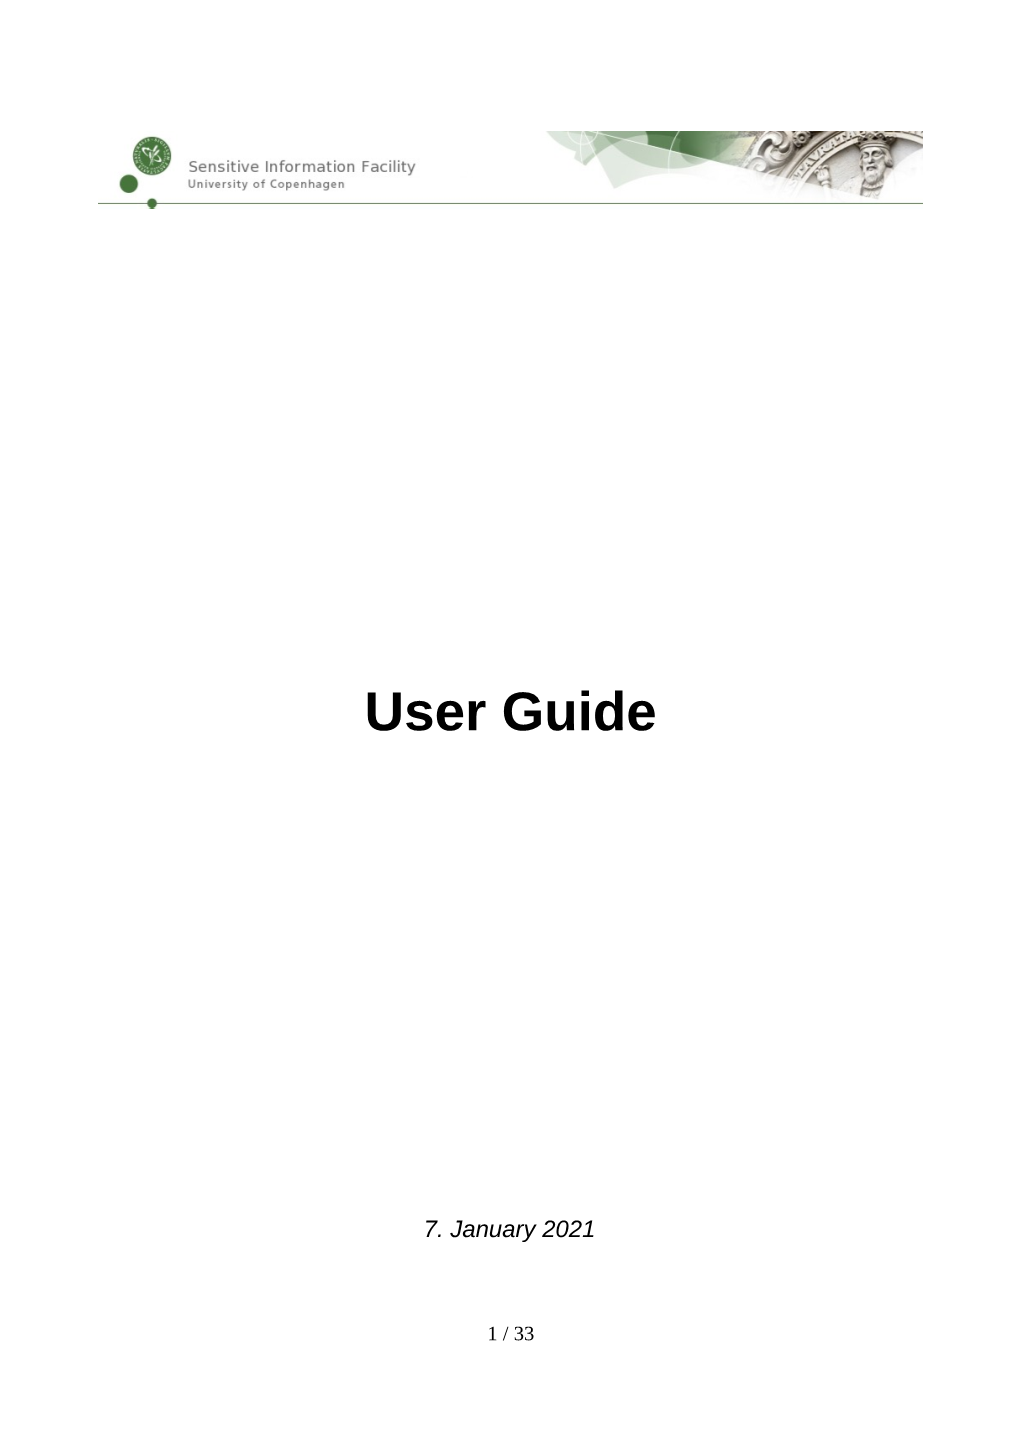 Ucph-Sif-User-Guide.Pdf